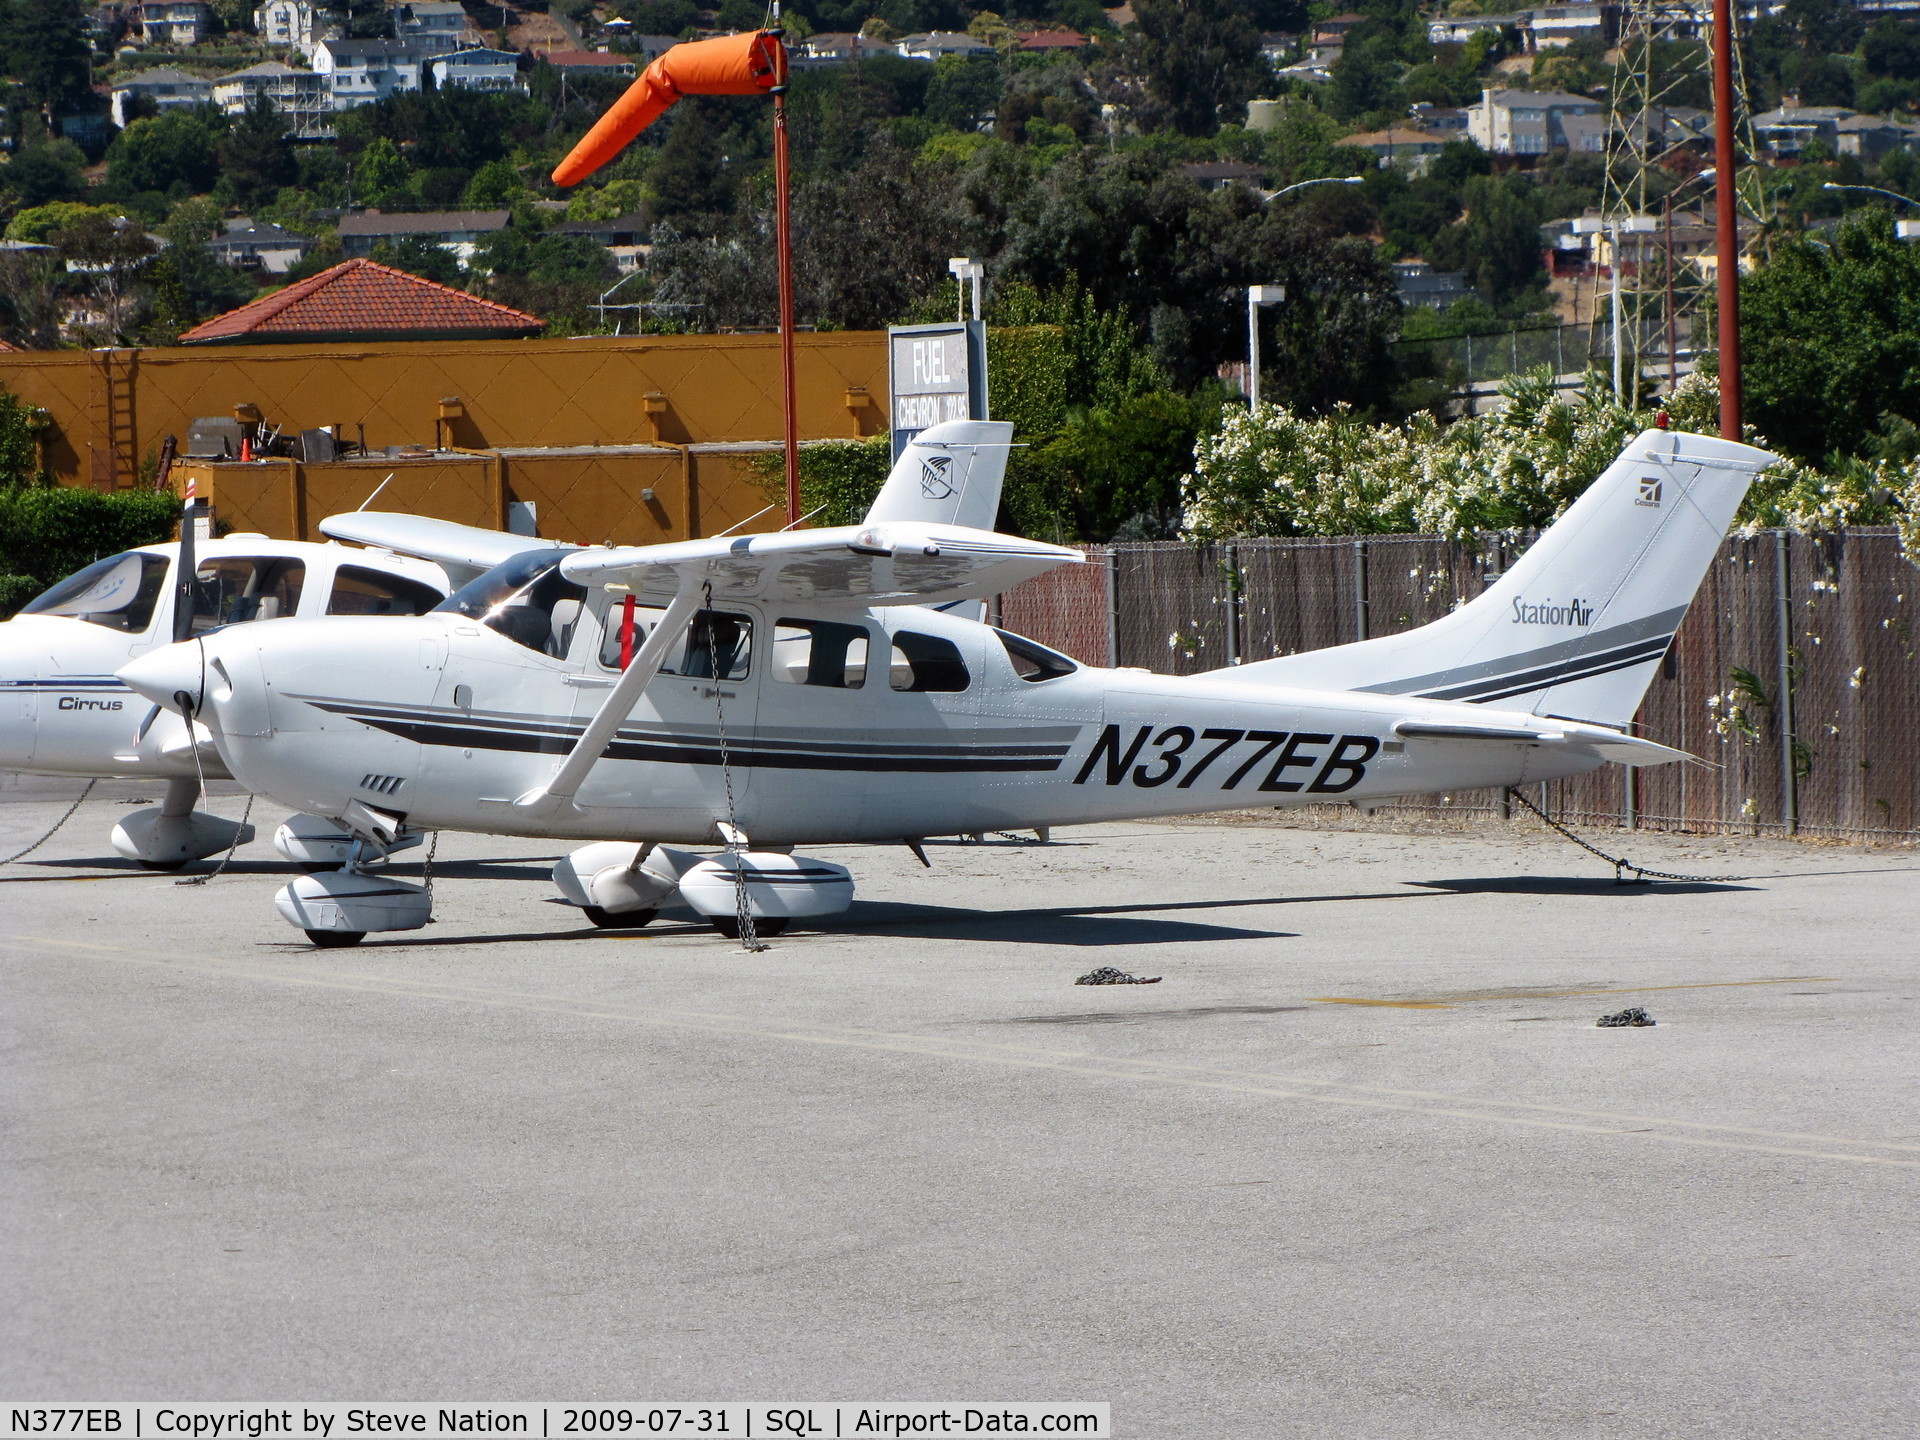 N377EB, 2002 Cessna 206H Stationair C/N 20608182, 2002 Cessna 206H visiting from Salt Lake City, UT